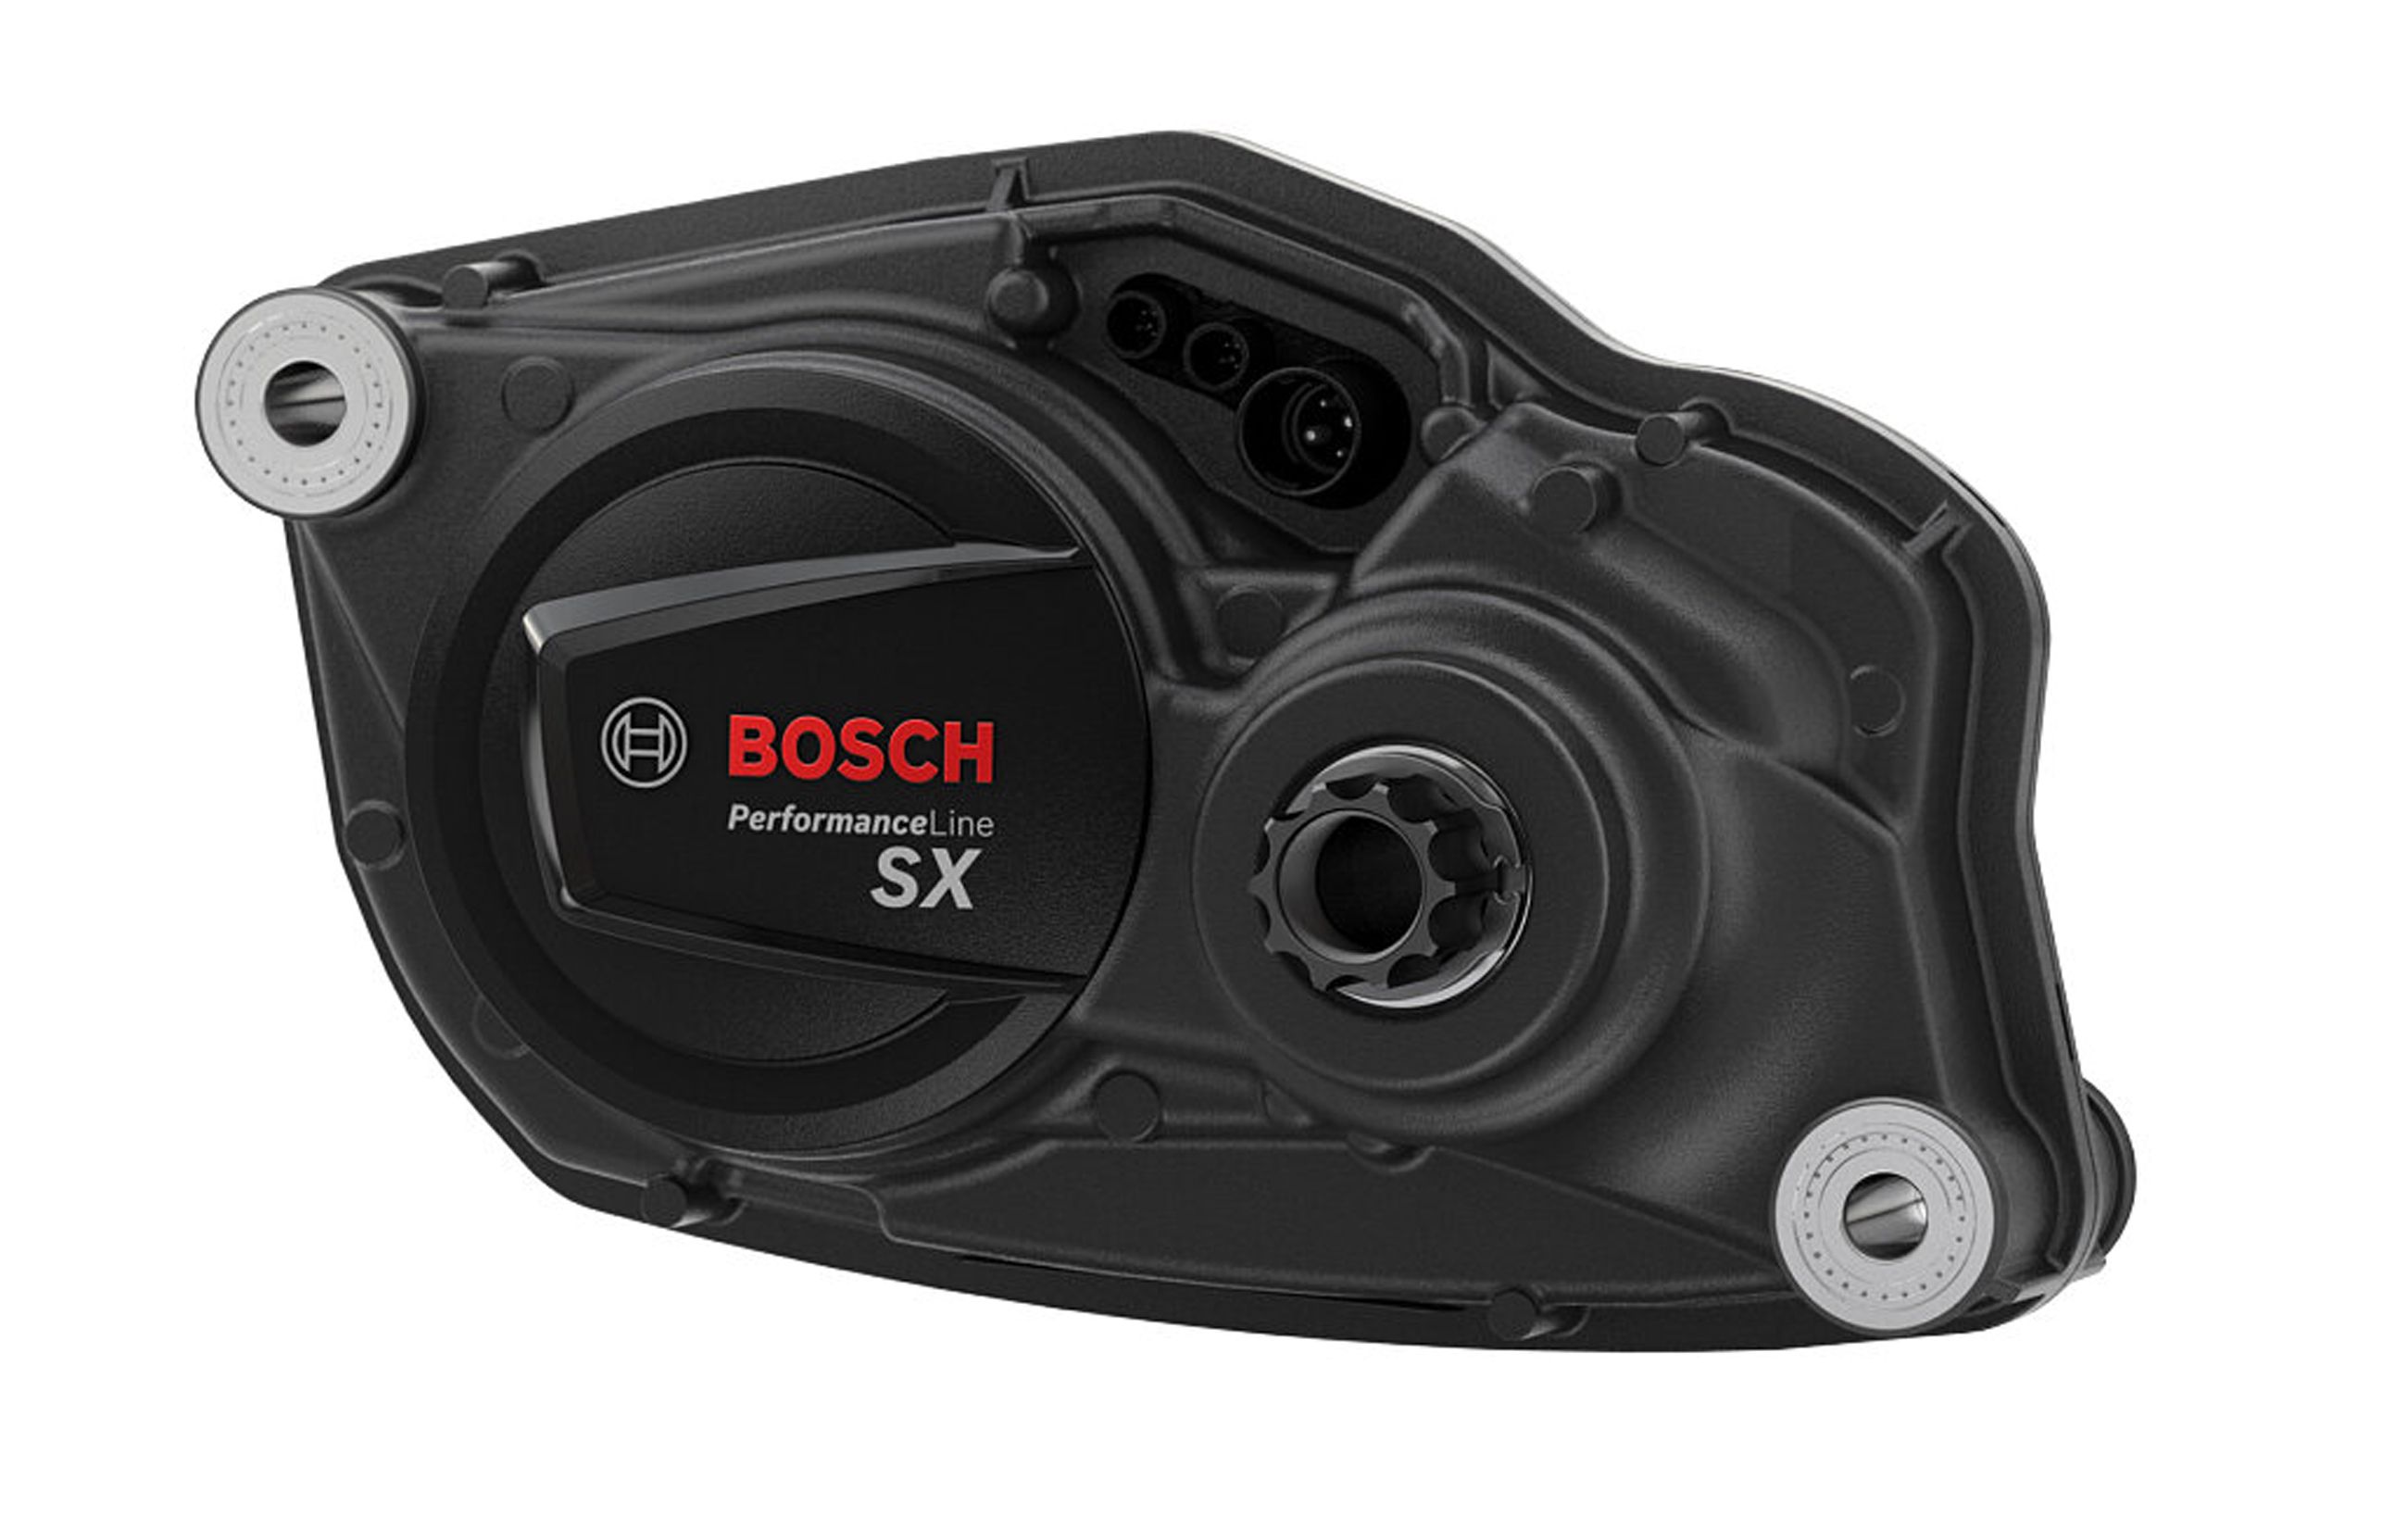 Bosch Performance Line SX Smart System